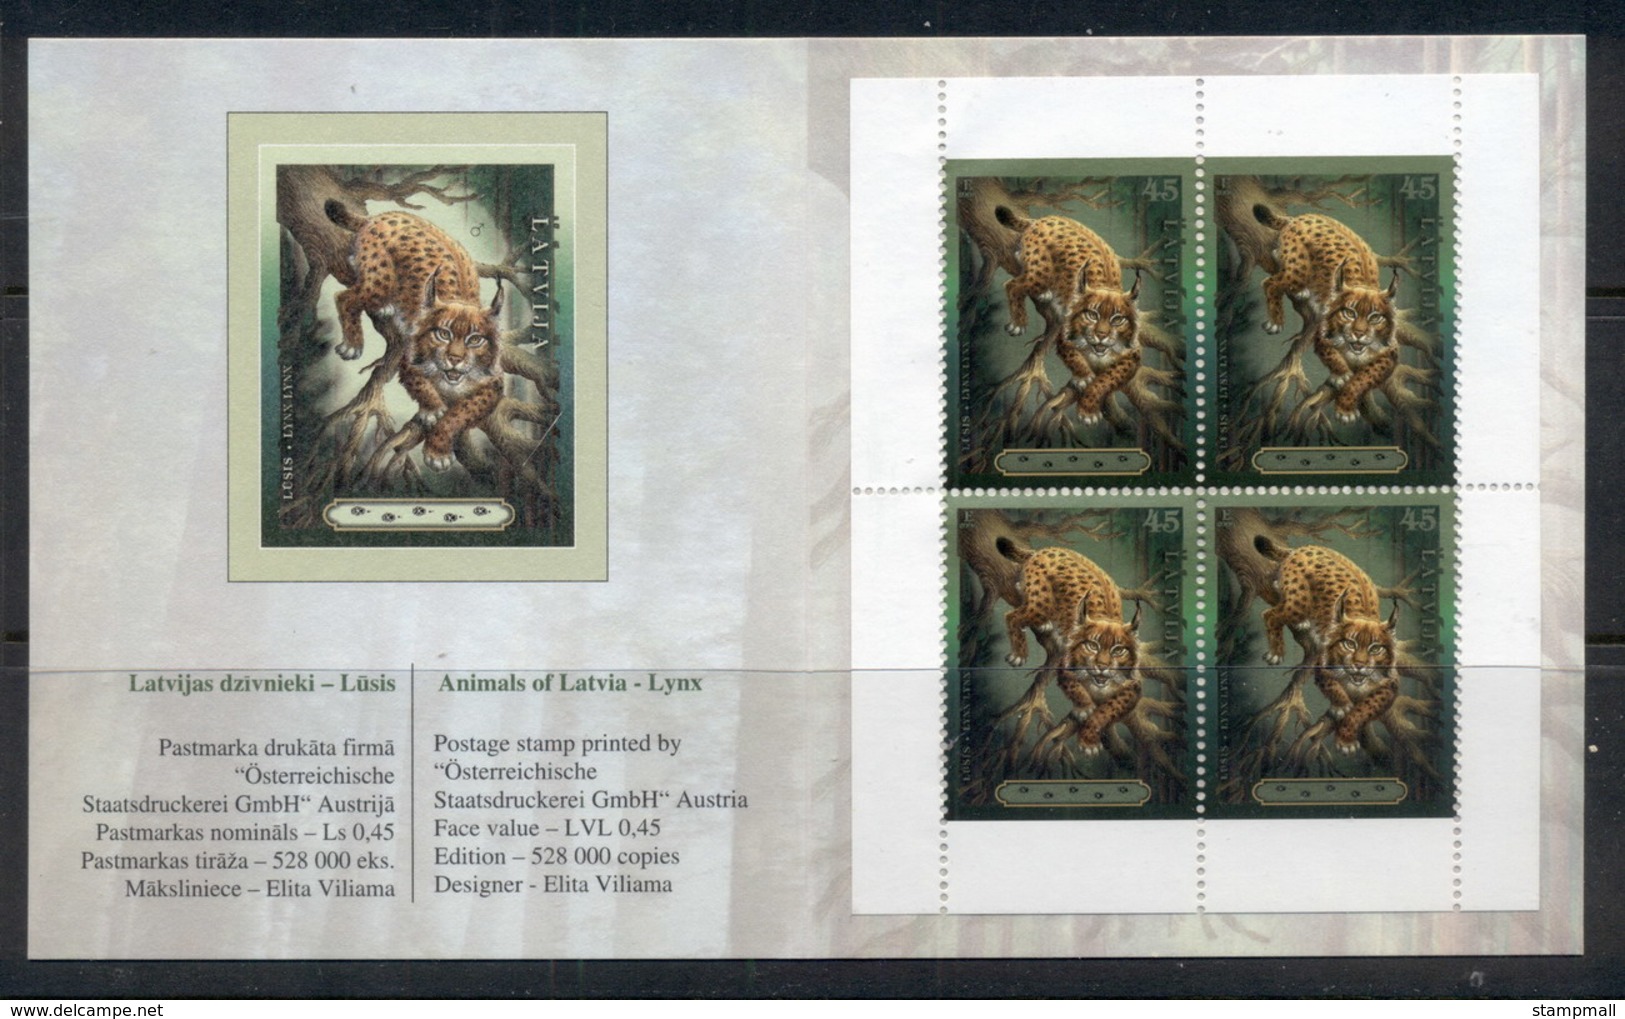 Latvia 2006 Wild Animals, Lynx Booklet MUH - Latvia